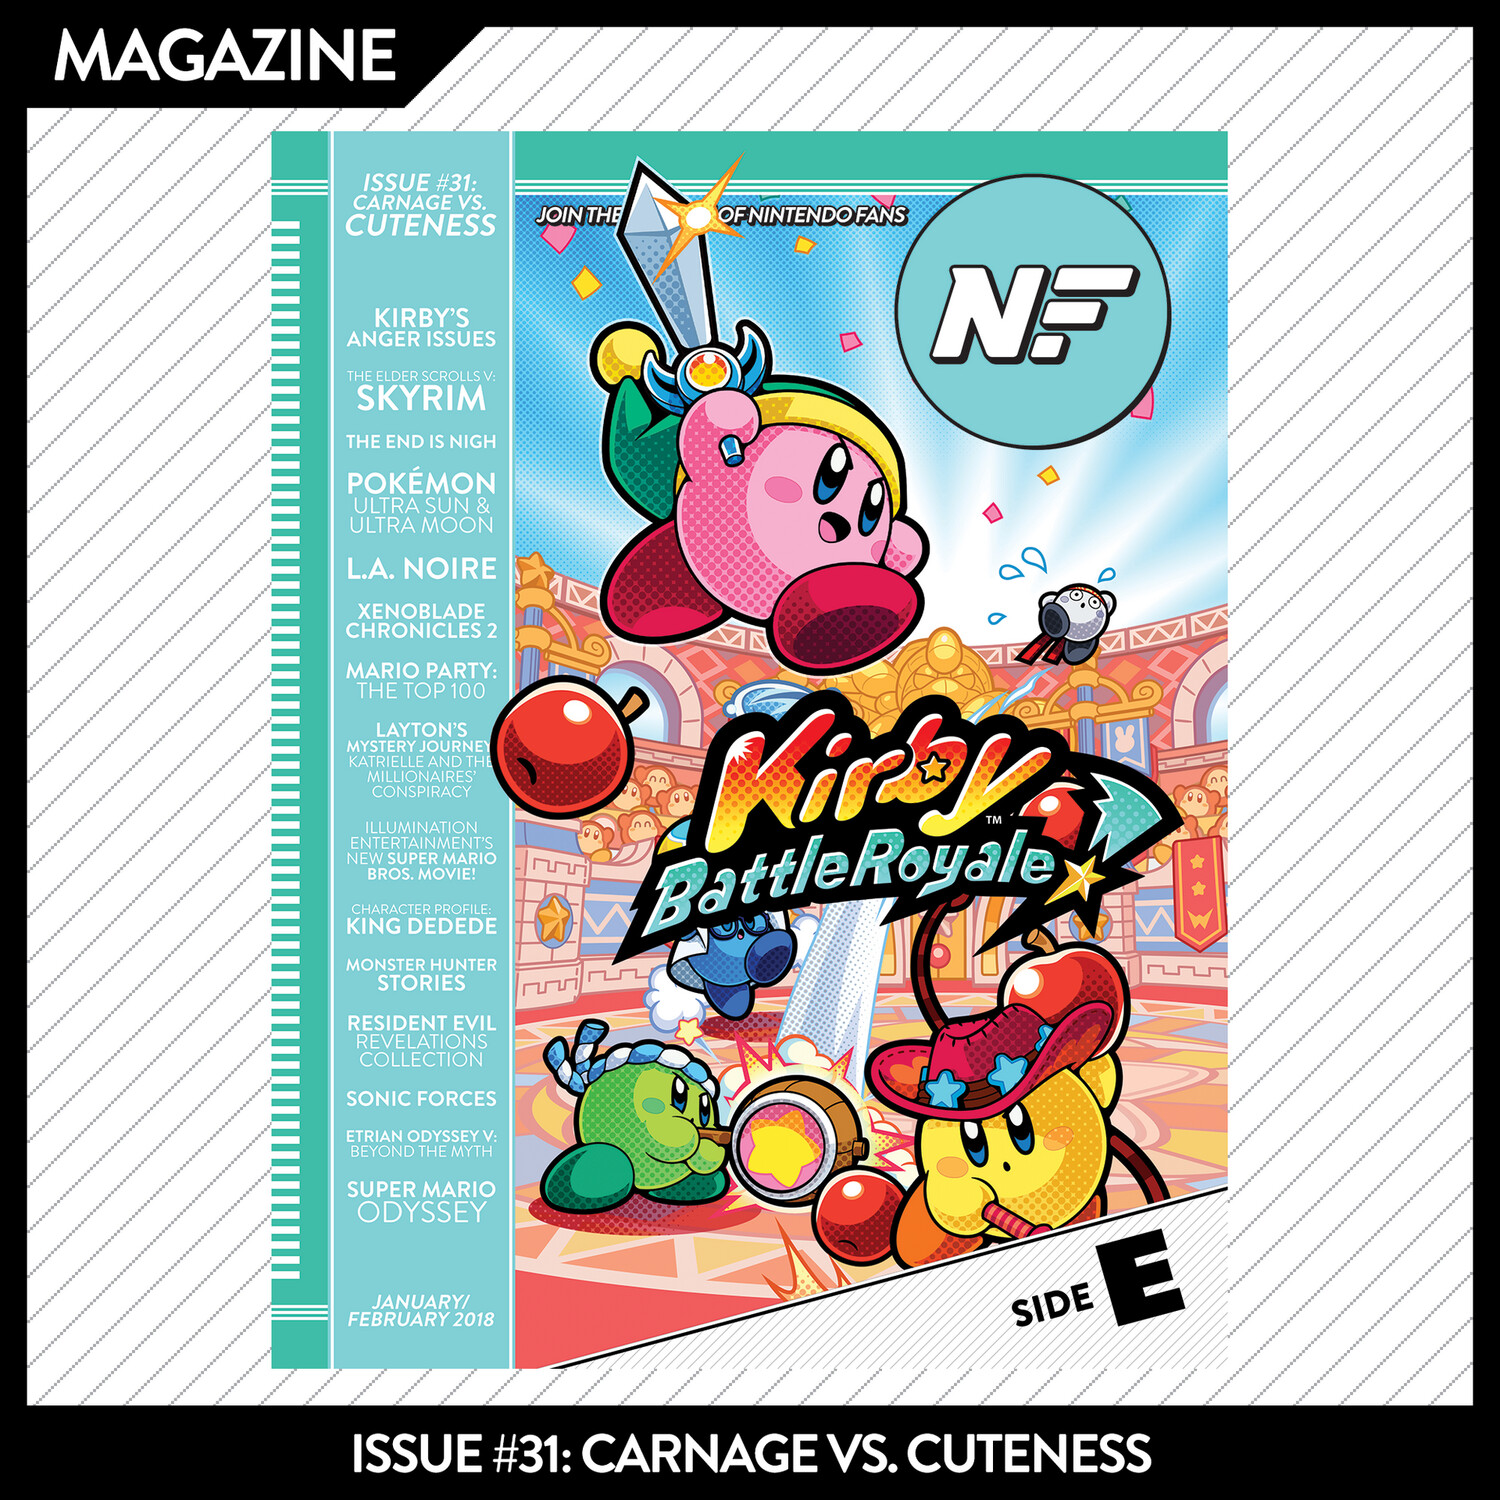 Issue #31: Carnage vs. Cuteness – January/February 2018